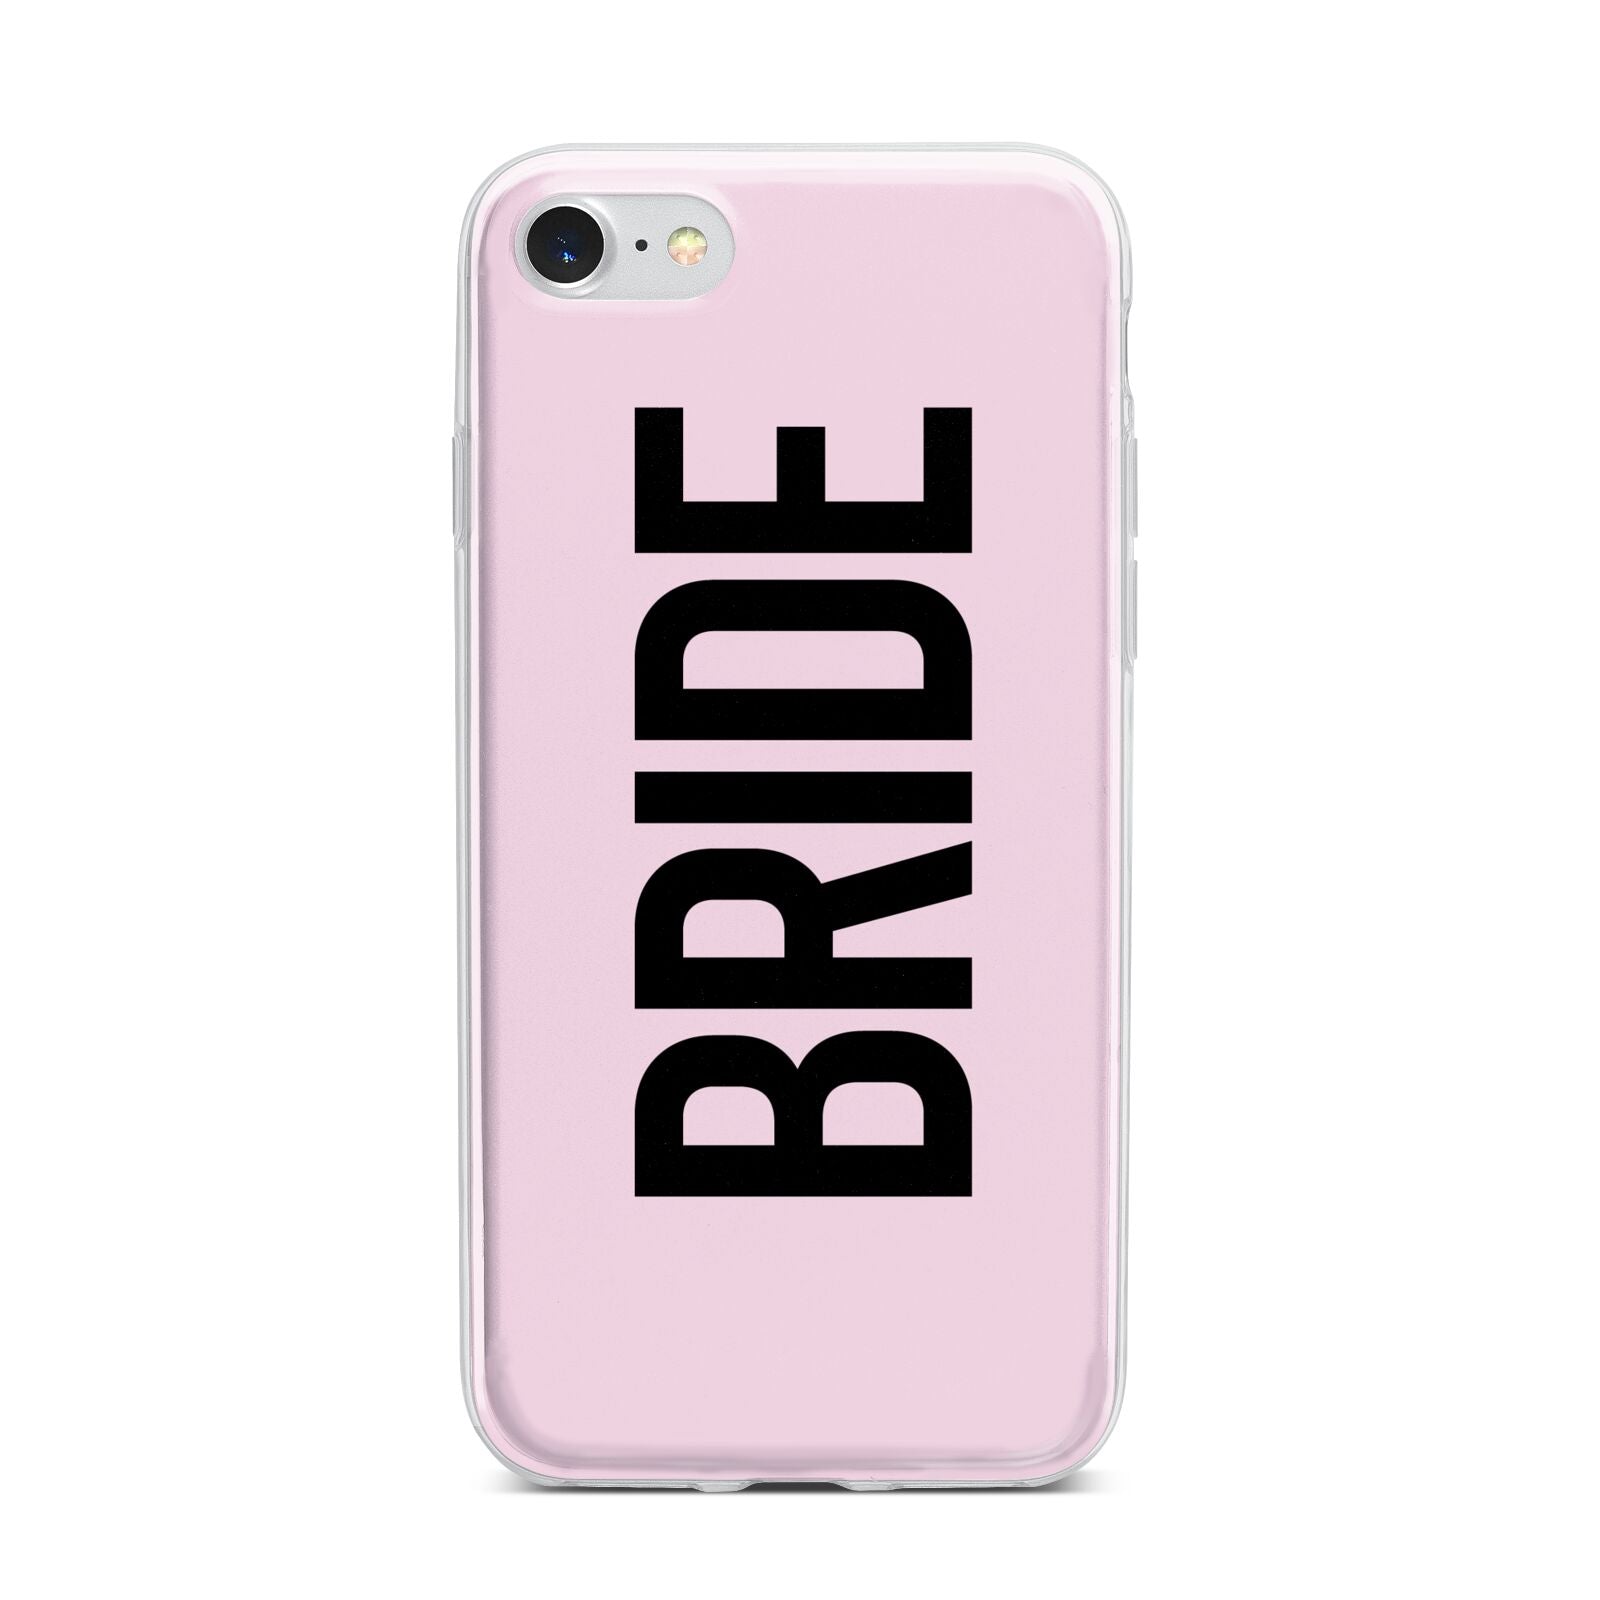 Bride iPhone 7 Bumper Case on Silver iPhone